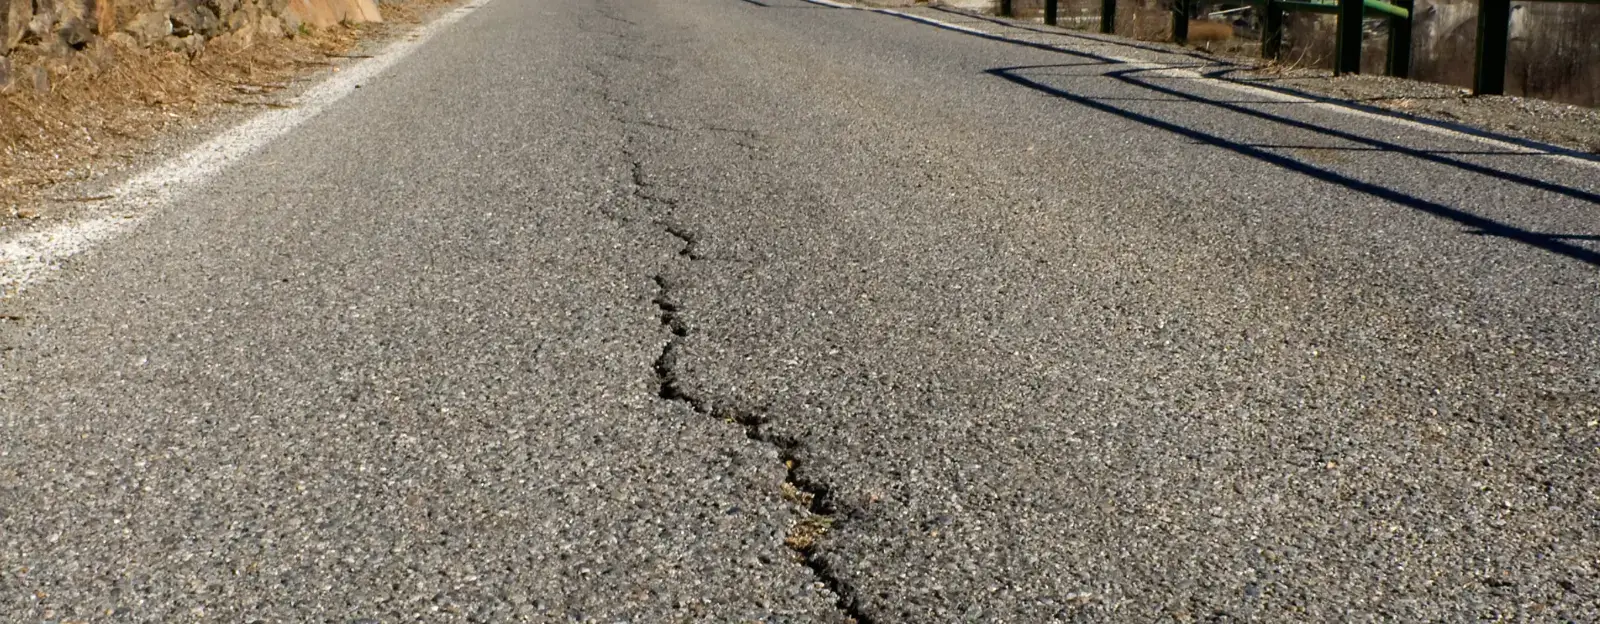 Wheel-path road cracking